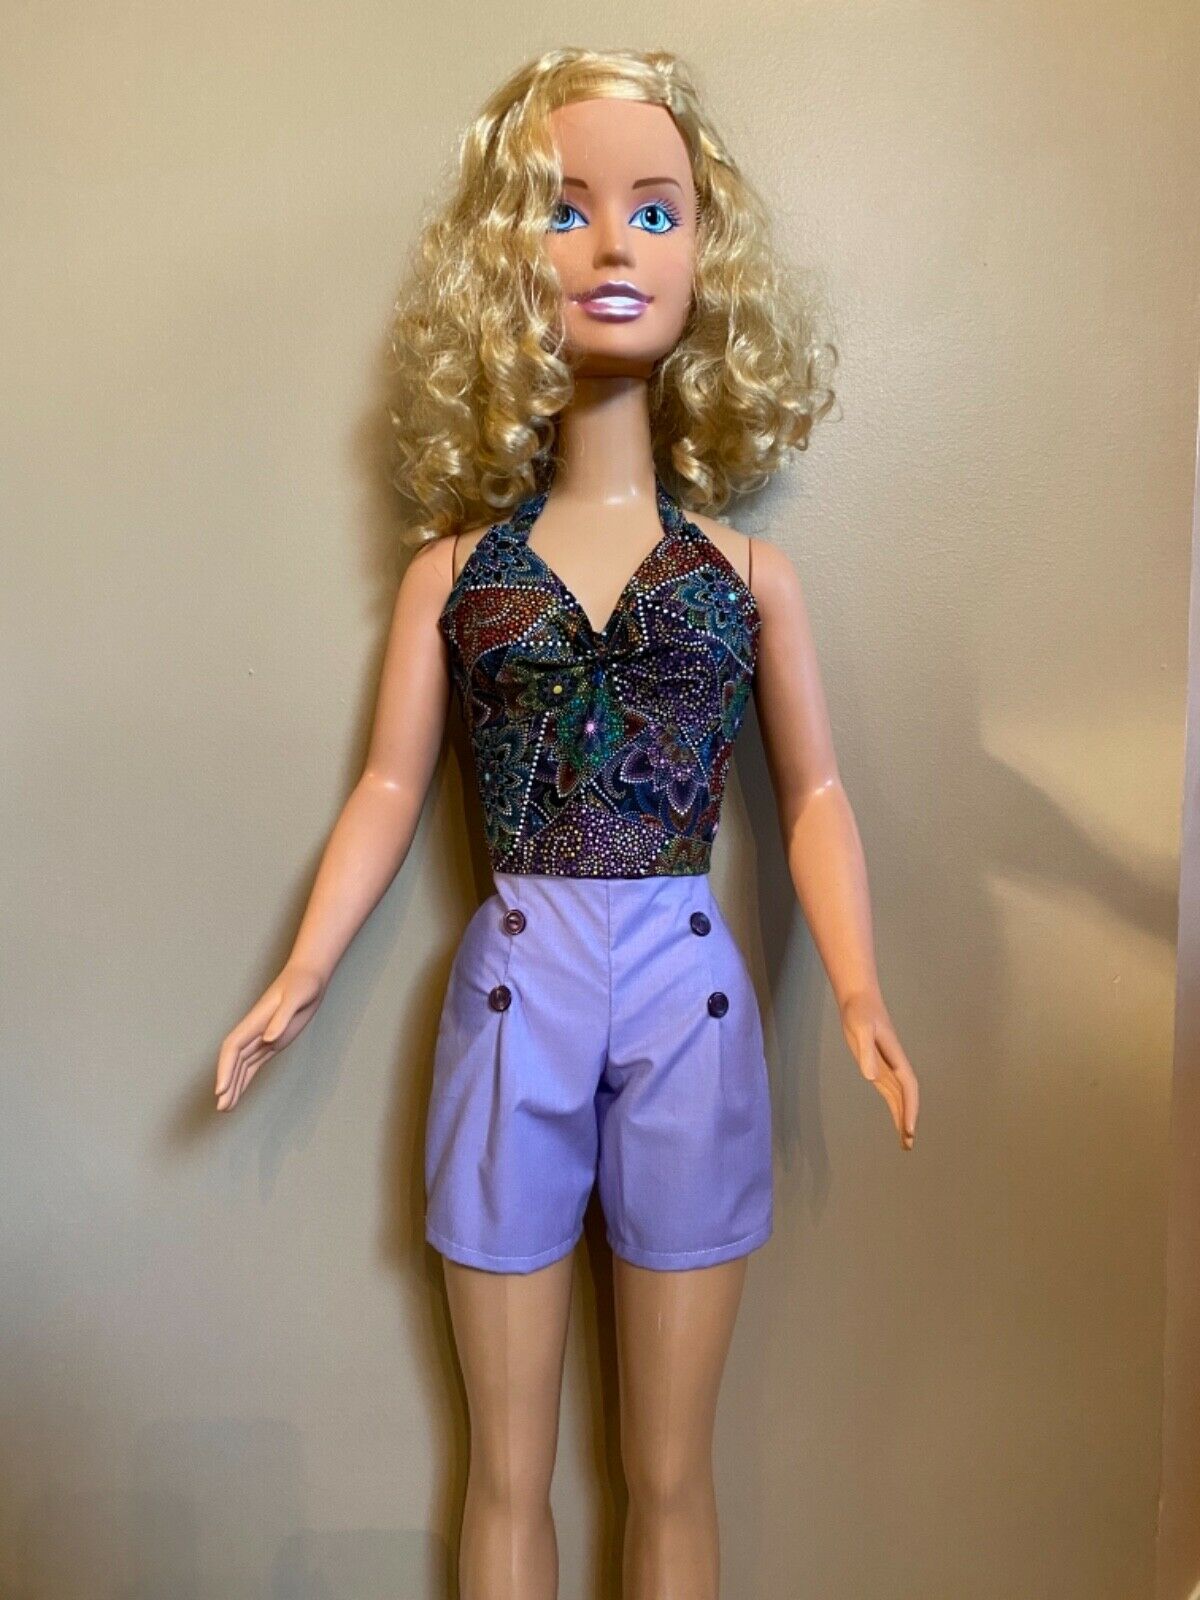 My Size Barbie Clothes -36 Inch- Geometric Rainbow Print Top & Lavender Shorts